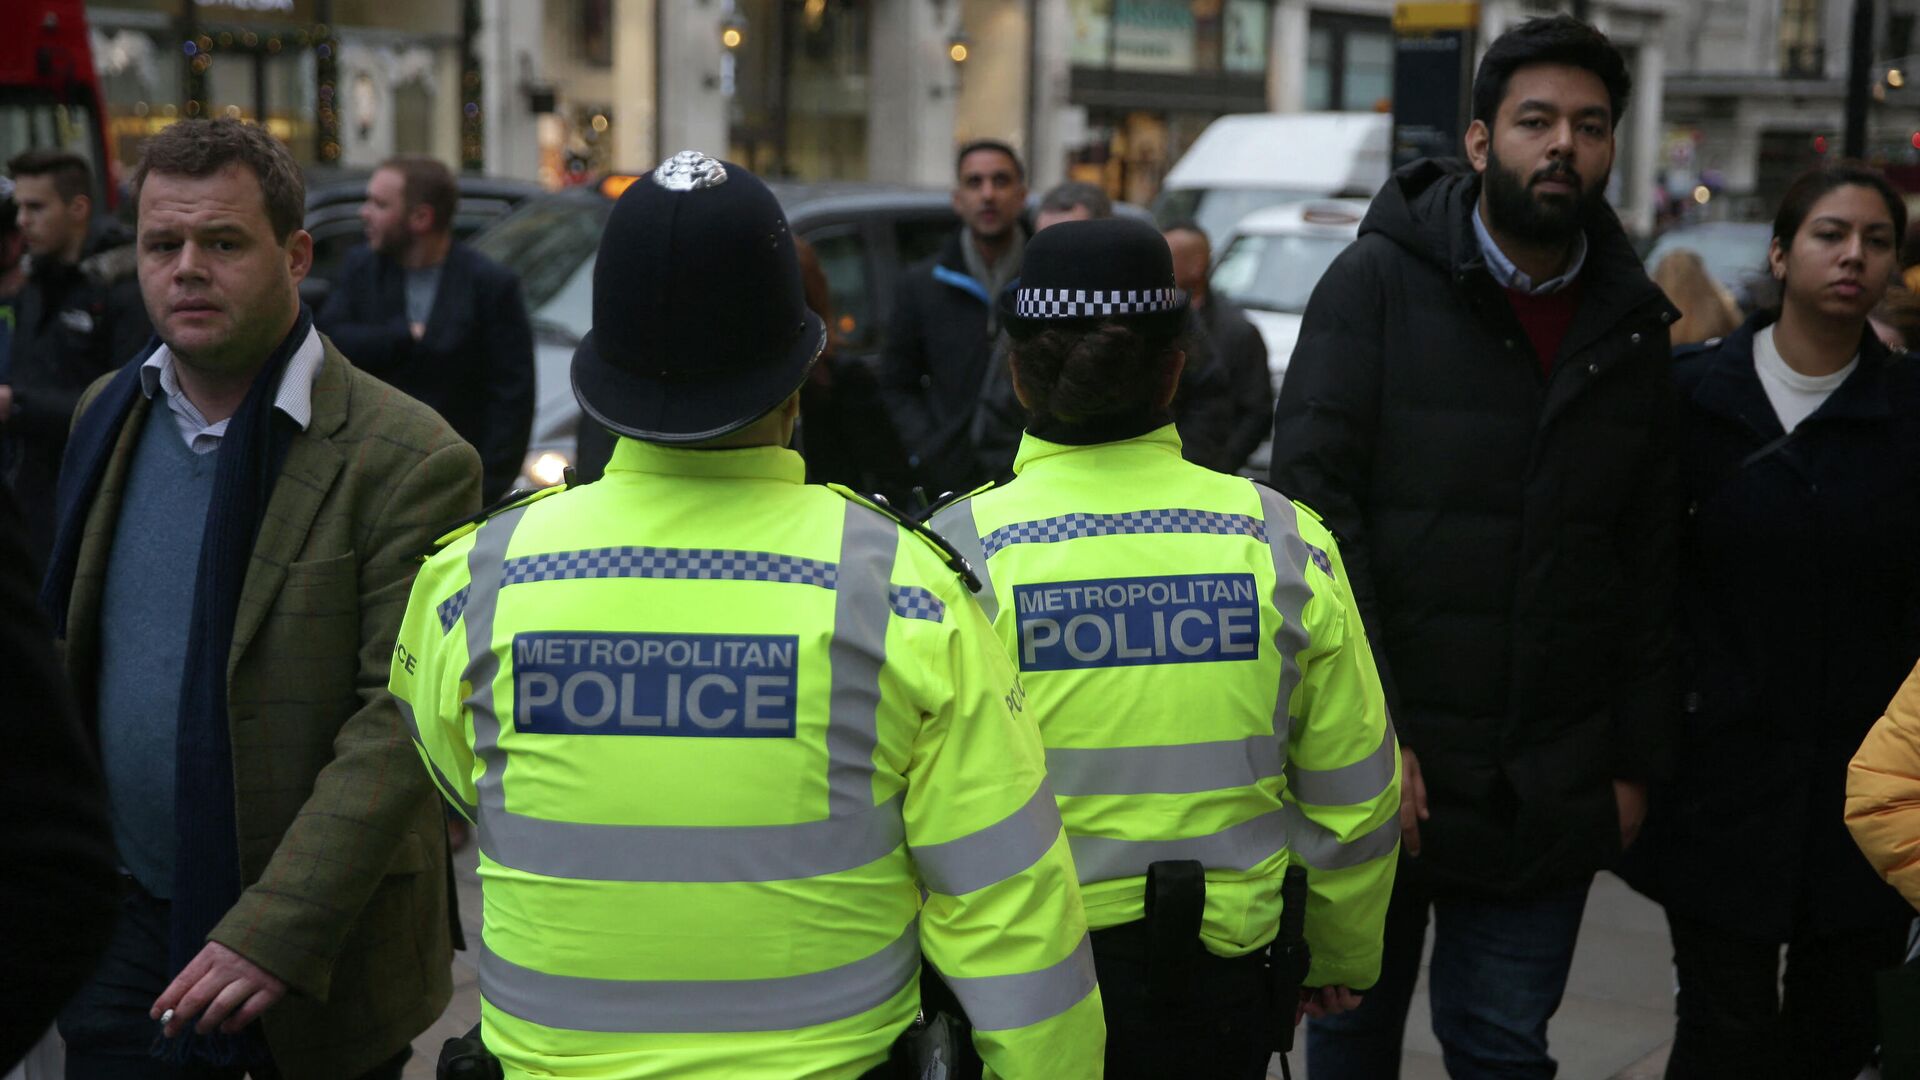 Members of the Metropolitan Police patrol amongst the shoppers on Oxford Street, in central London on December 21, 2017 - Sputnik International, 1920, 19.03.2022